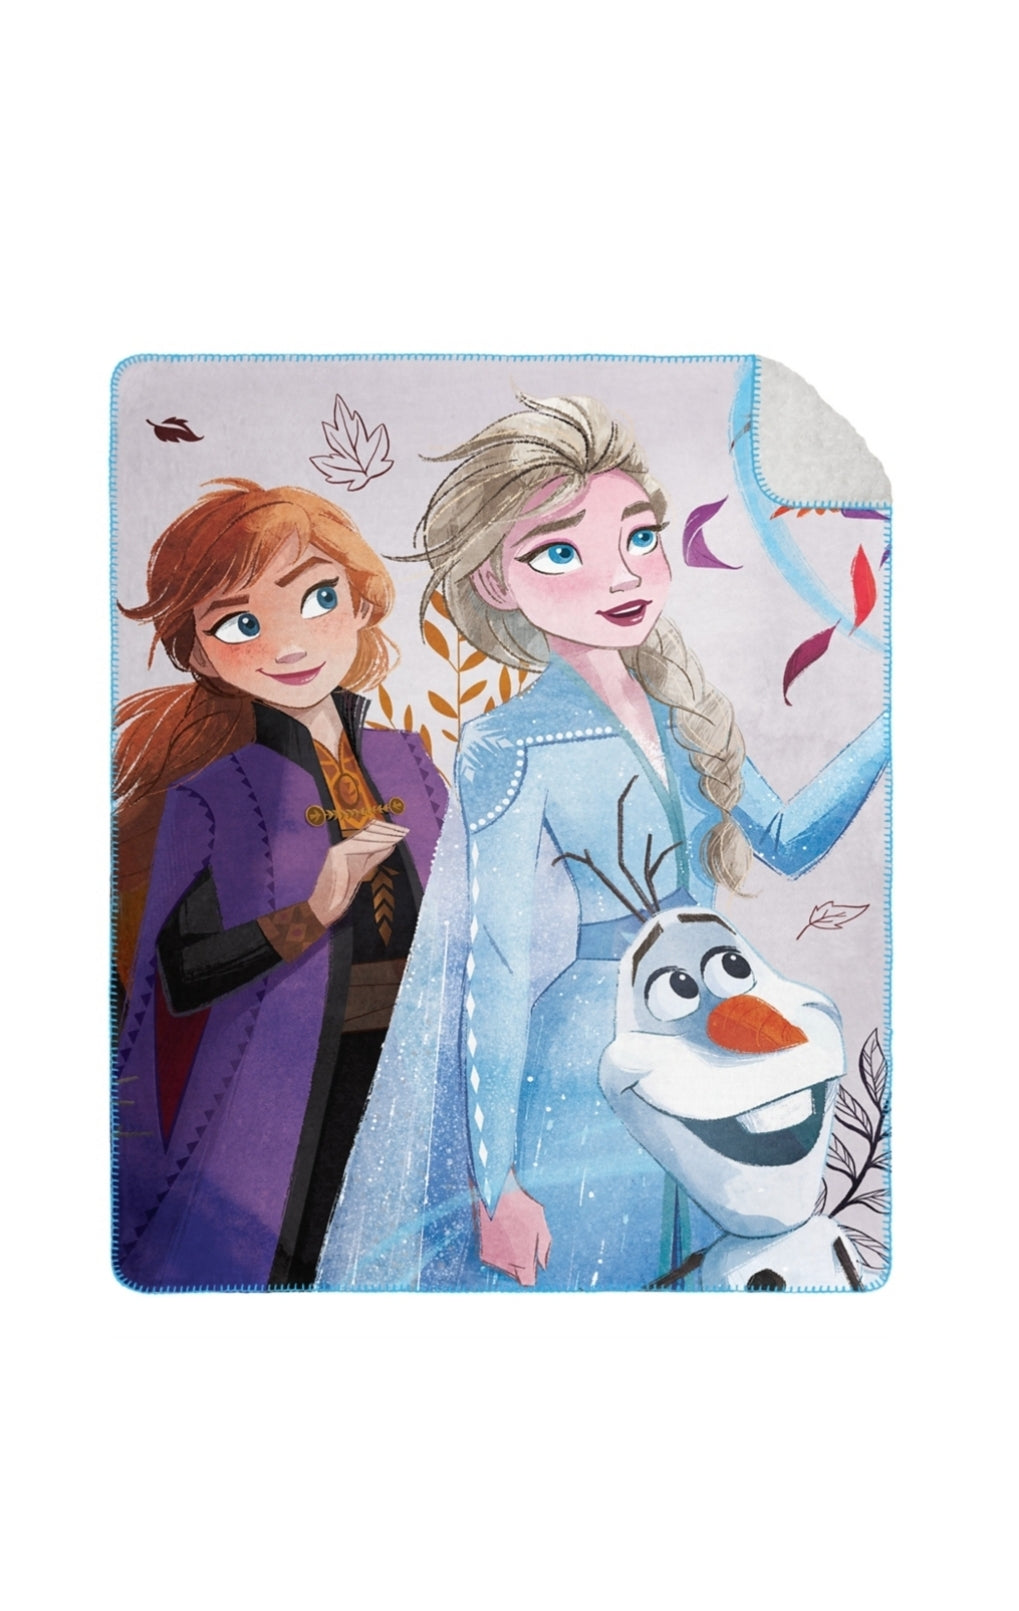 Disney's Frozen 2 "Mesmerized" Cloud Throw Blanket with Sherpa Back, 50" x 60"